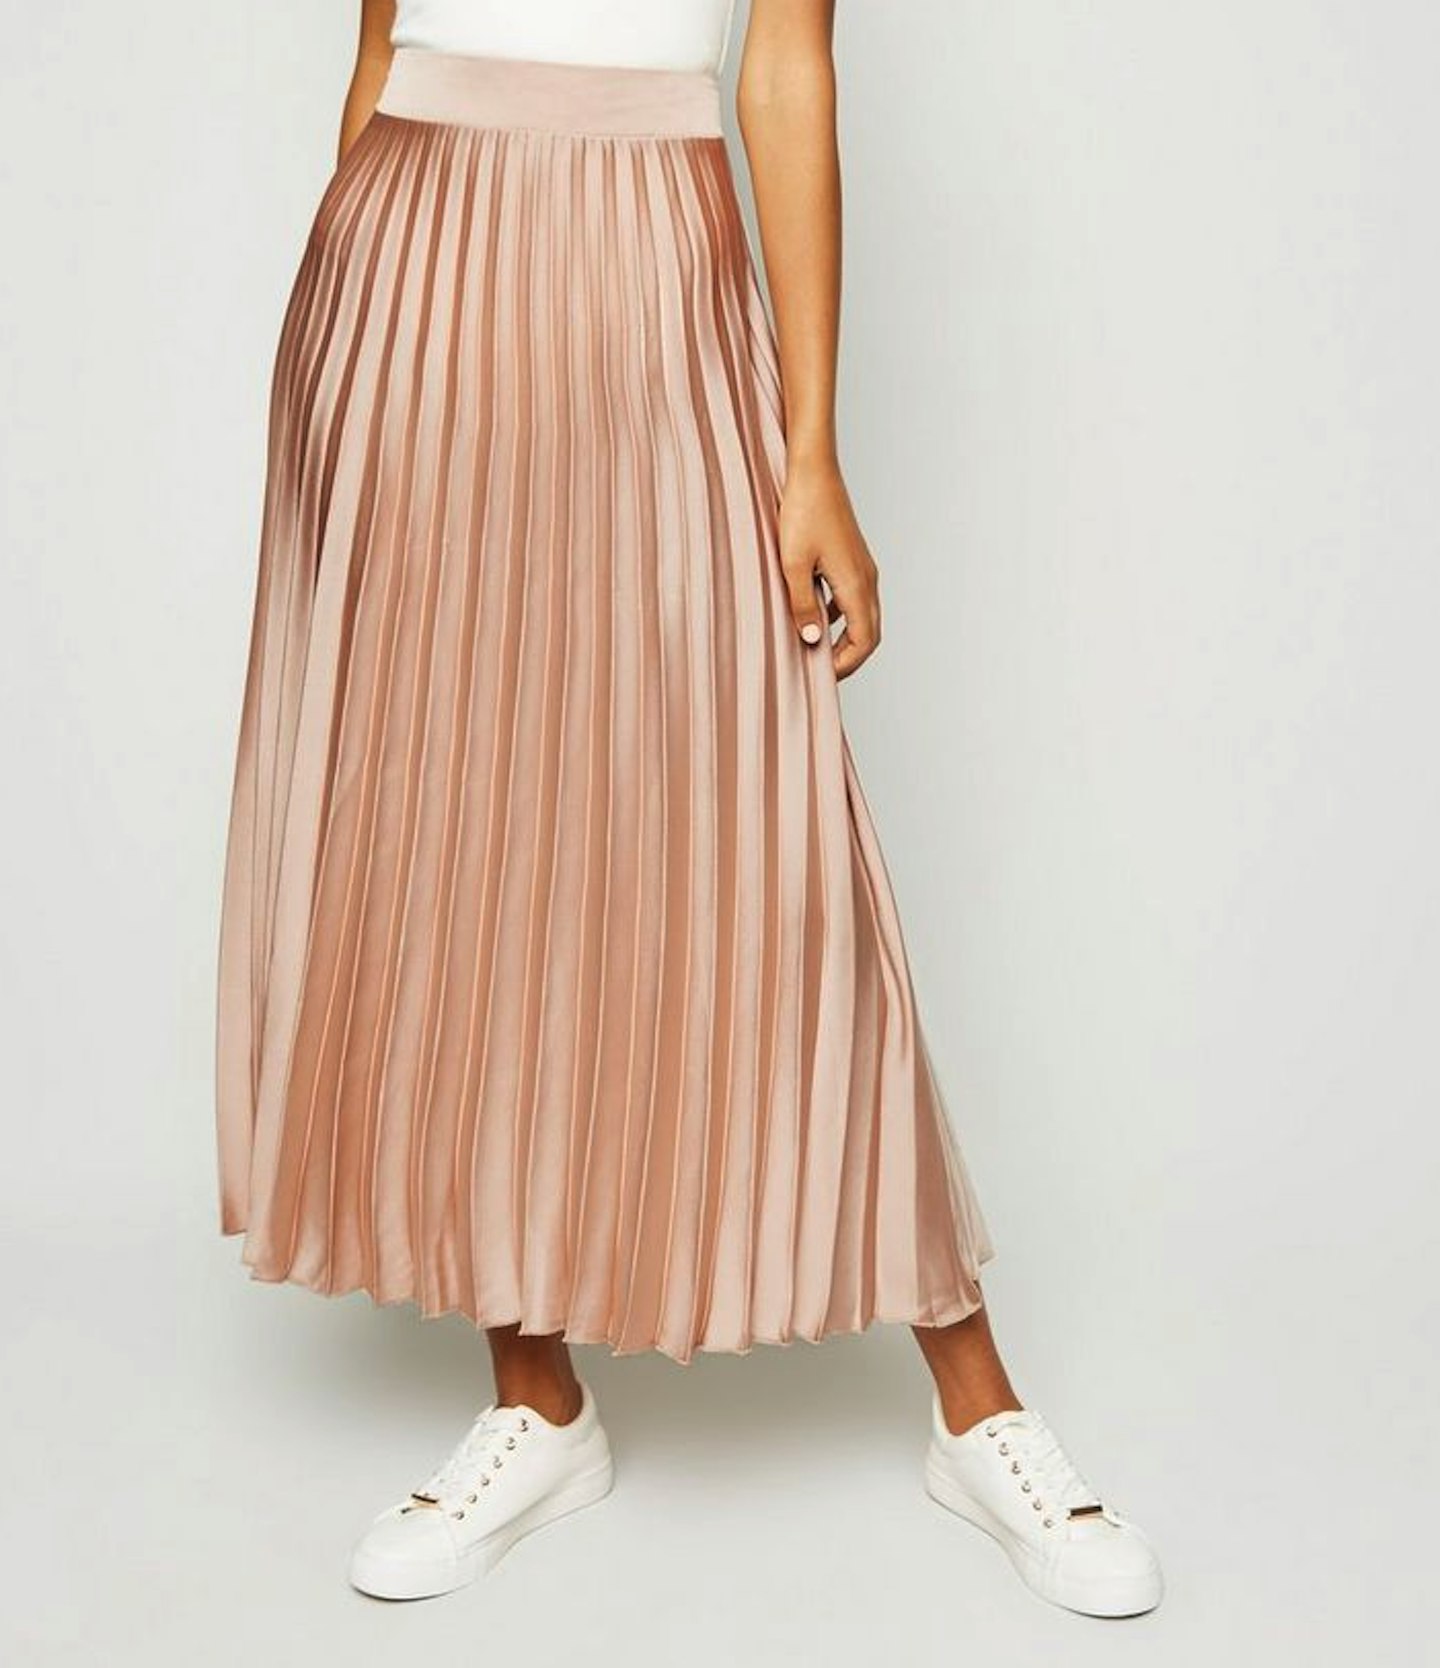 New Look Pale Pink Pleated Satin Midi Skirt, 22.99